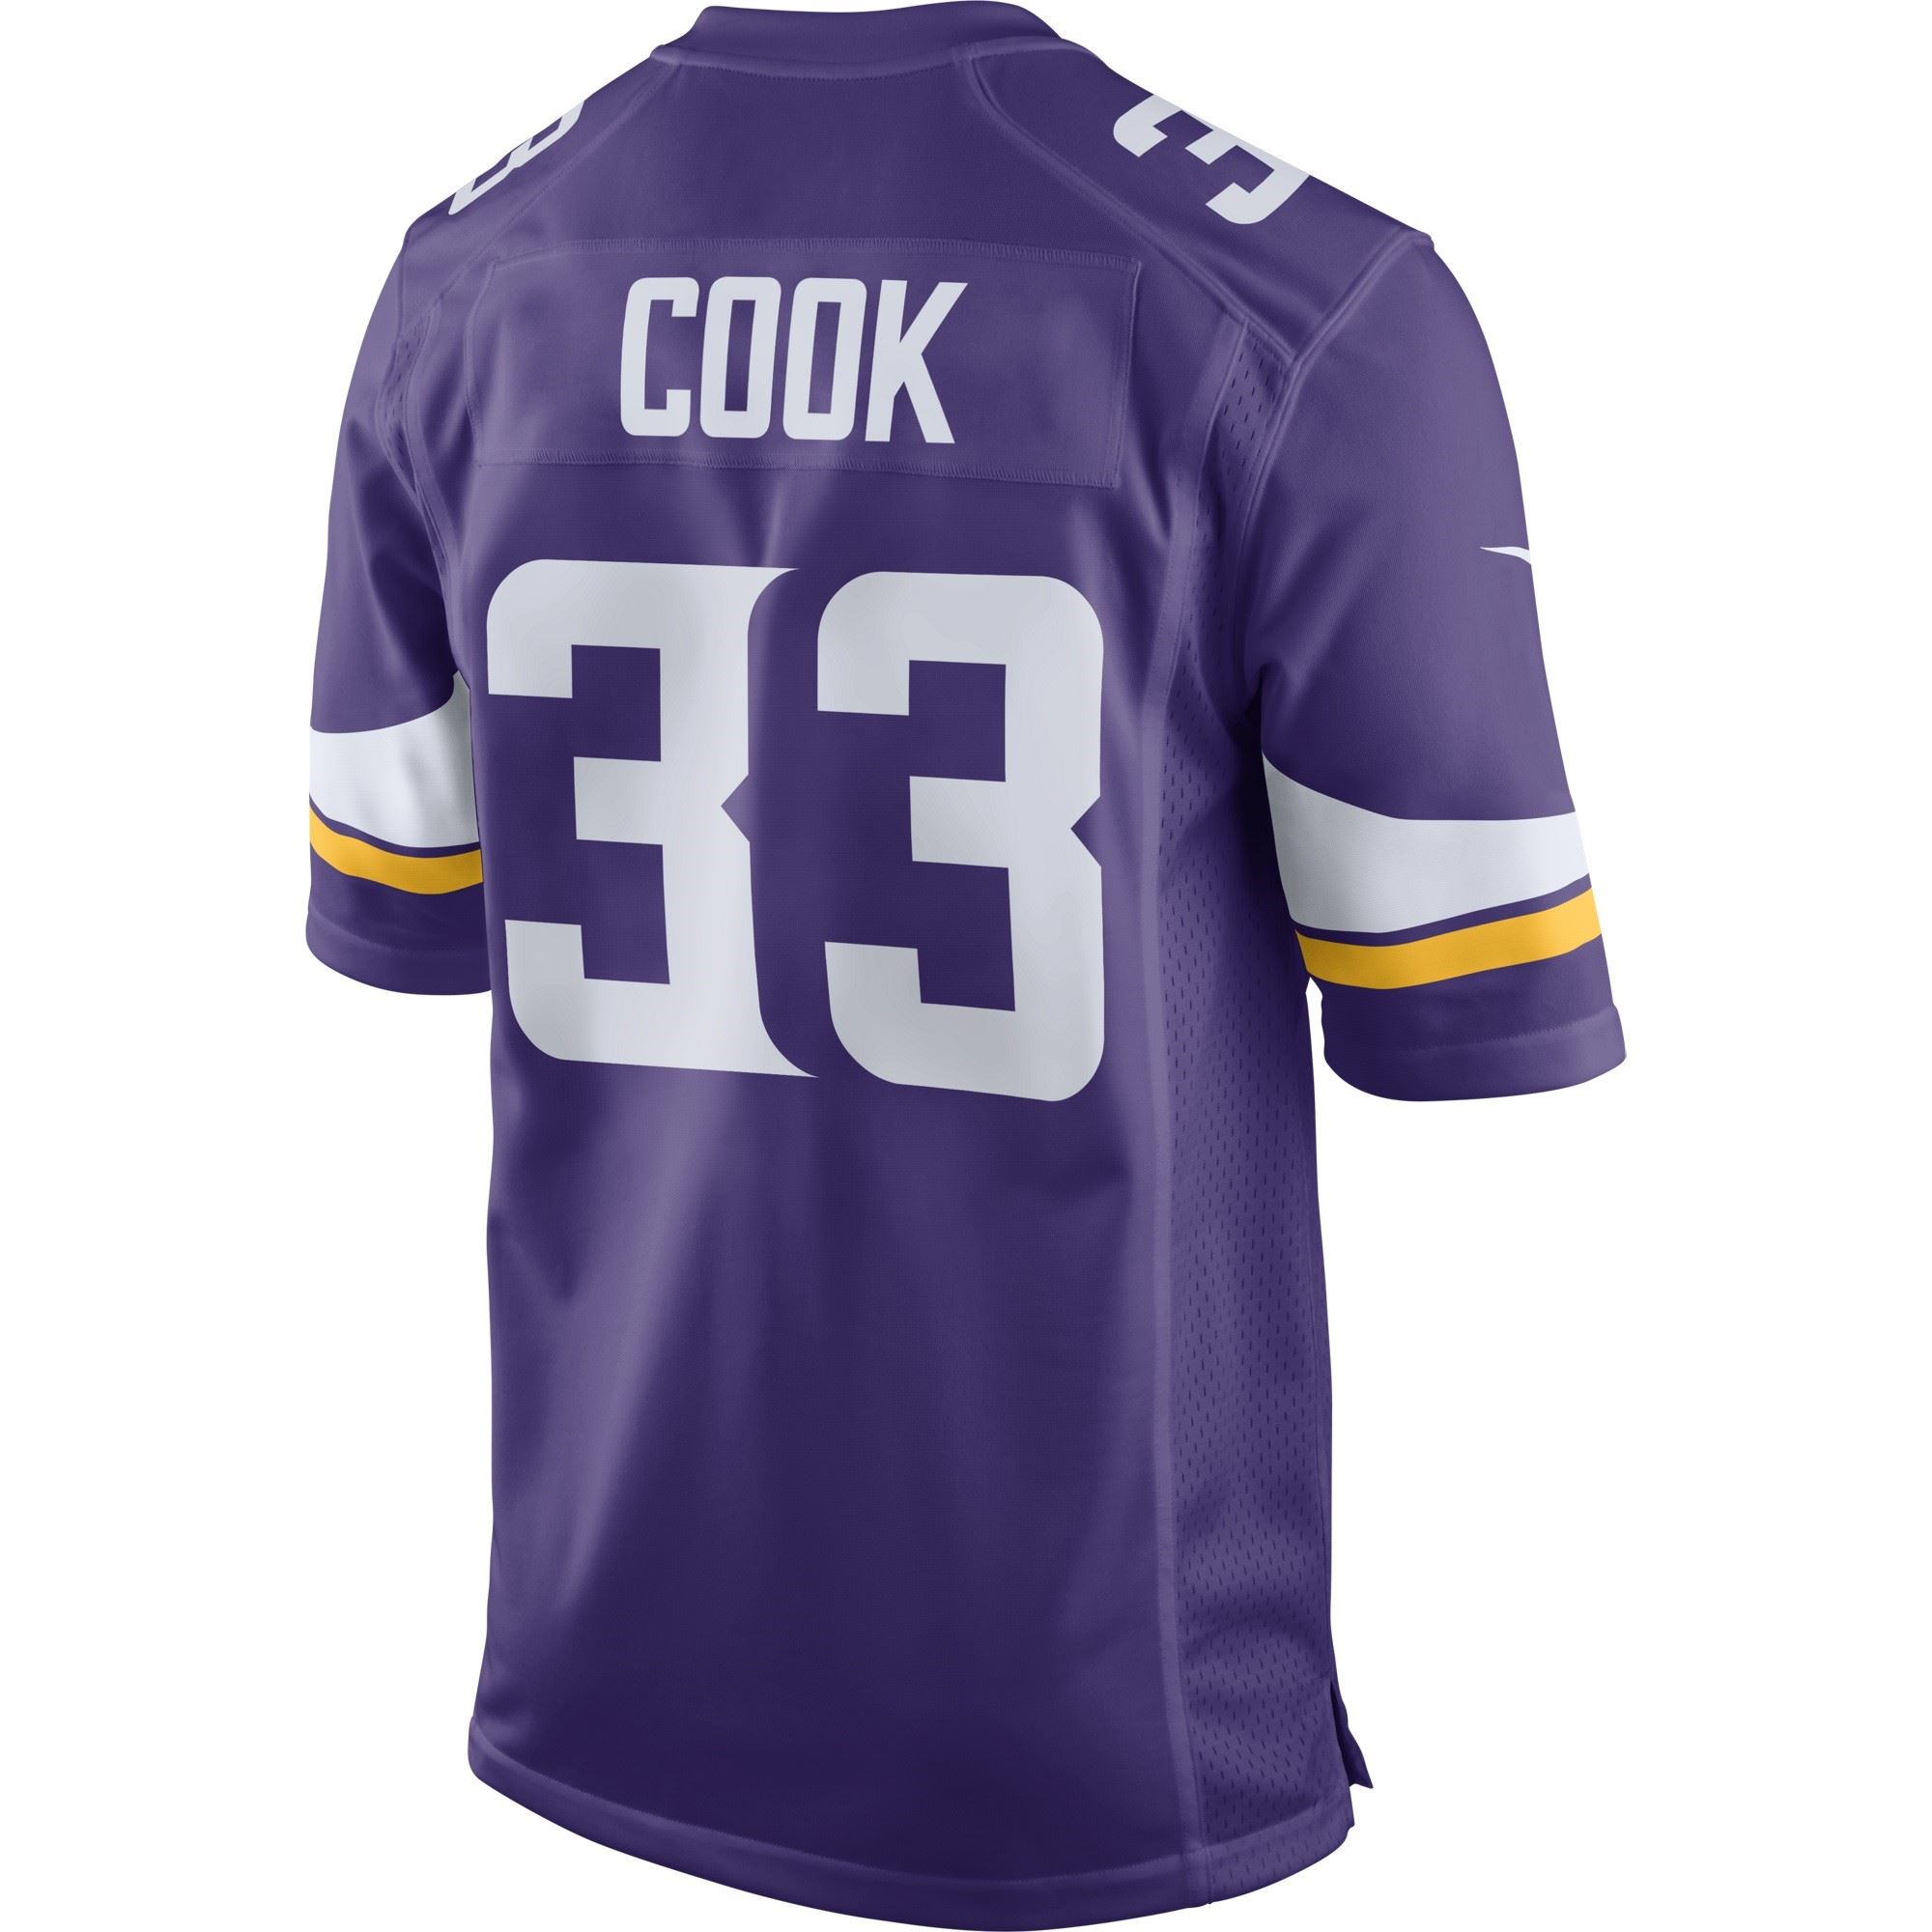 Dalvin Cook #33 Minnesota Vikings NFL Game Team Colour Jersey Nike